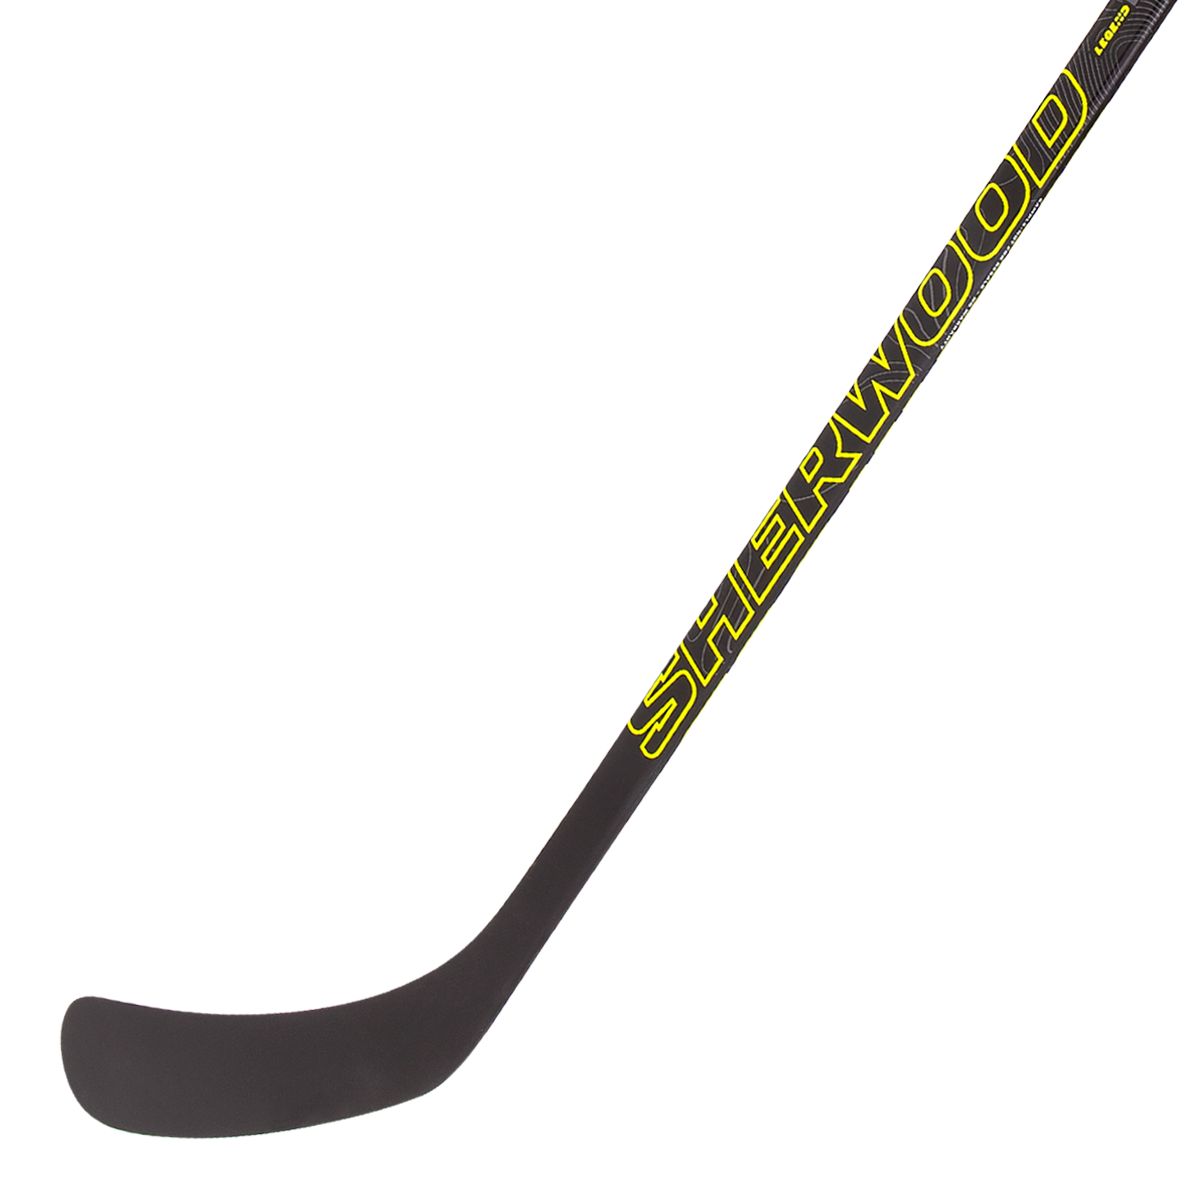 Sherwood Rekker Legend 4 Senior Hockey Stick